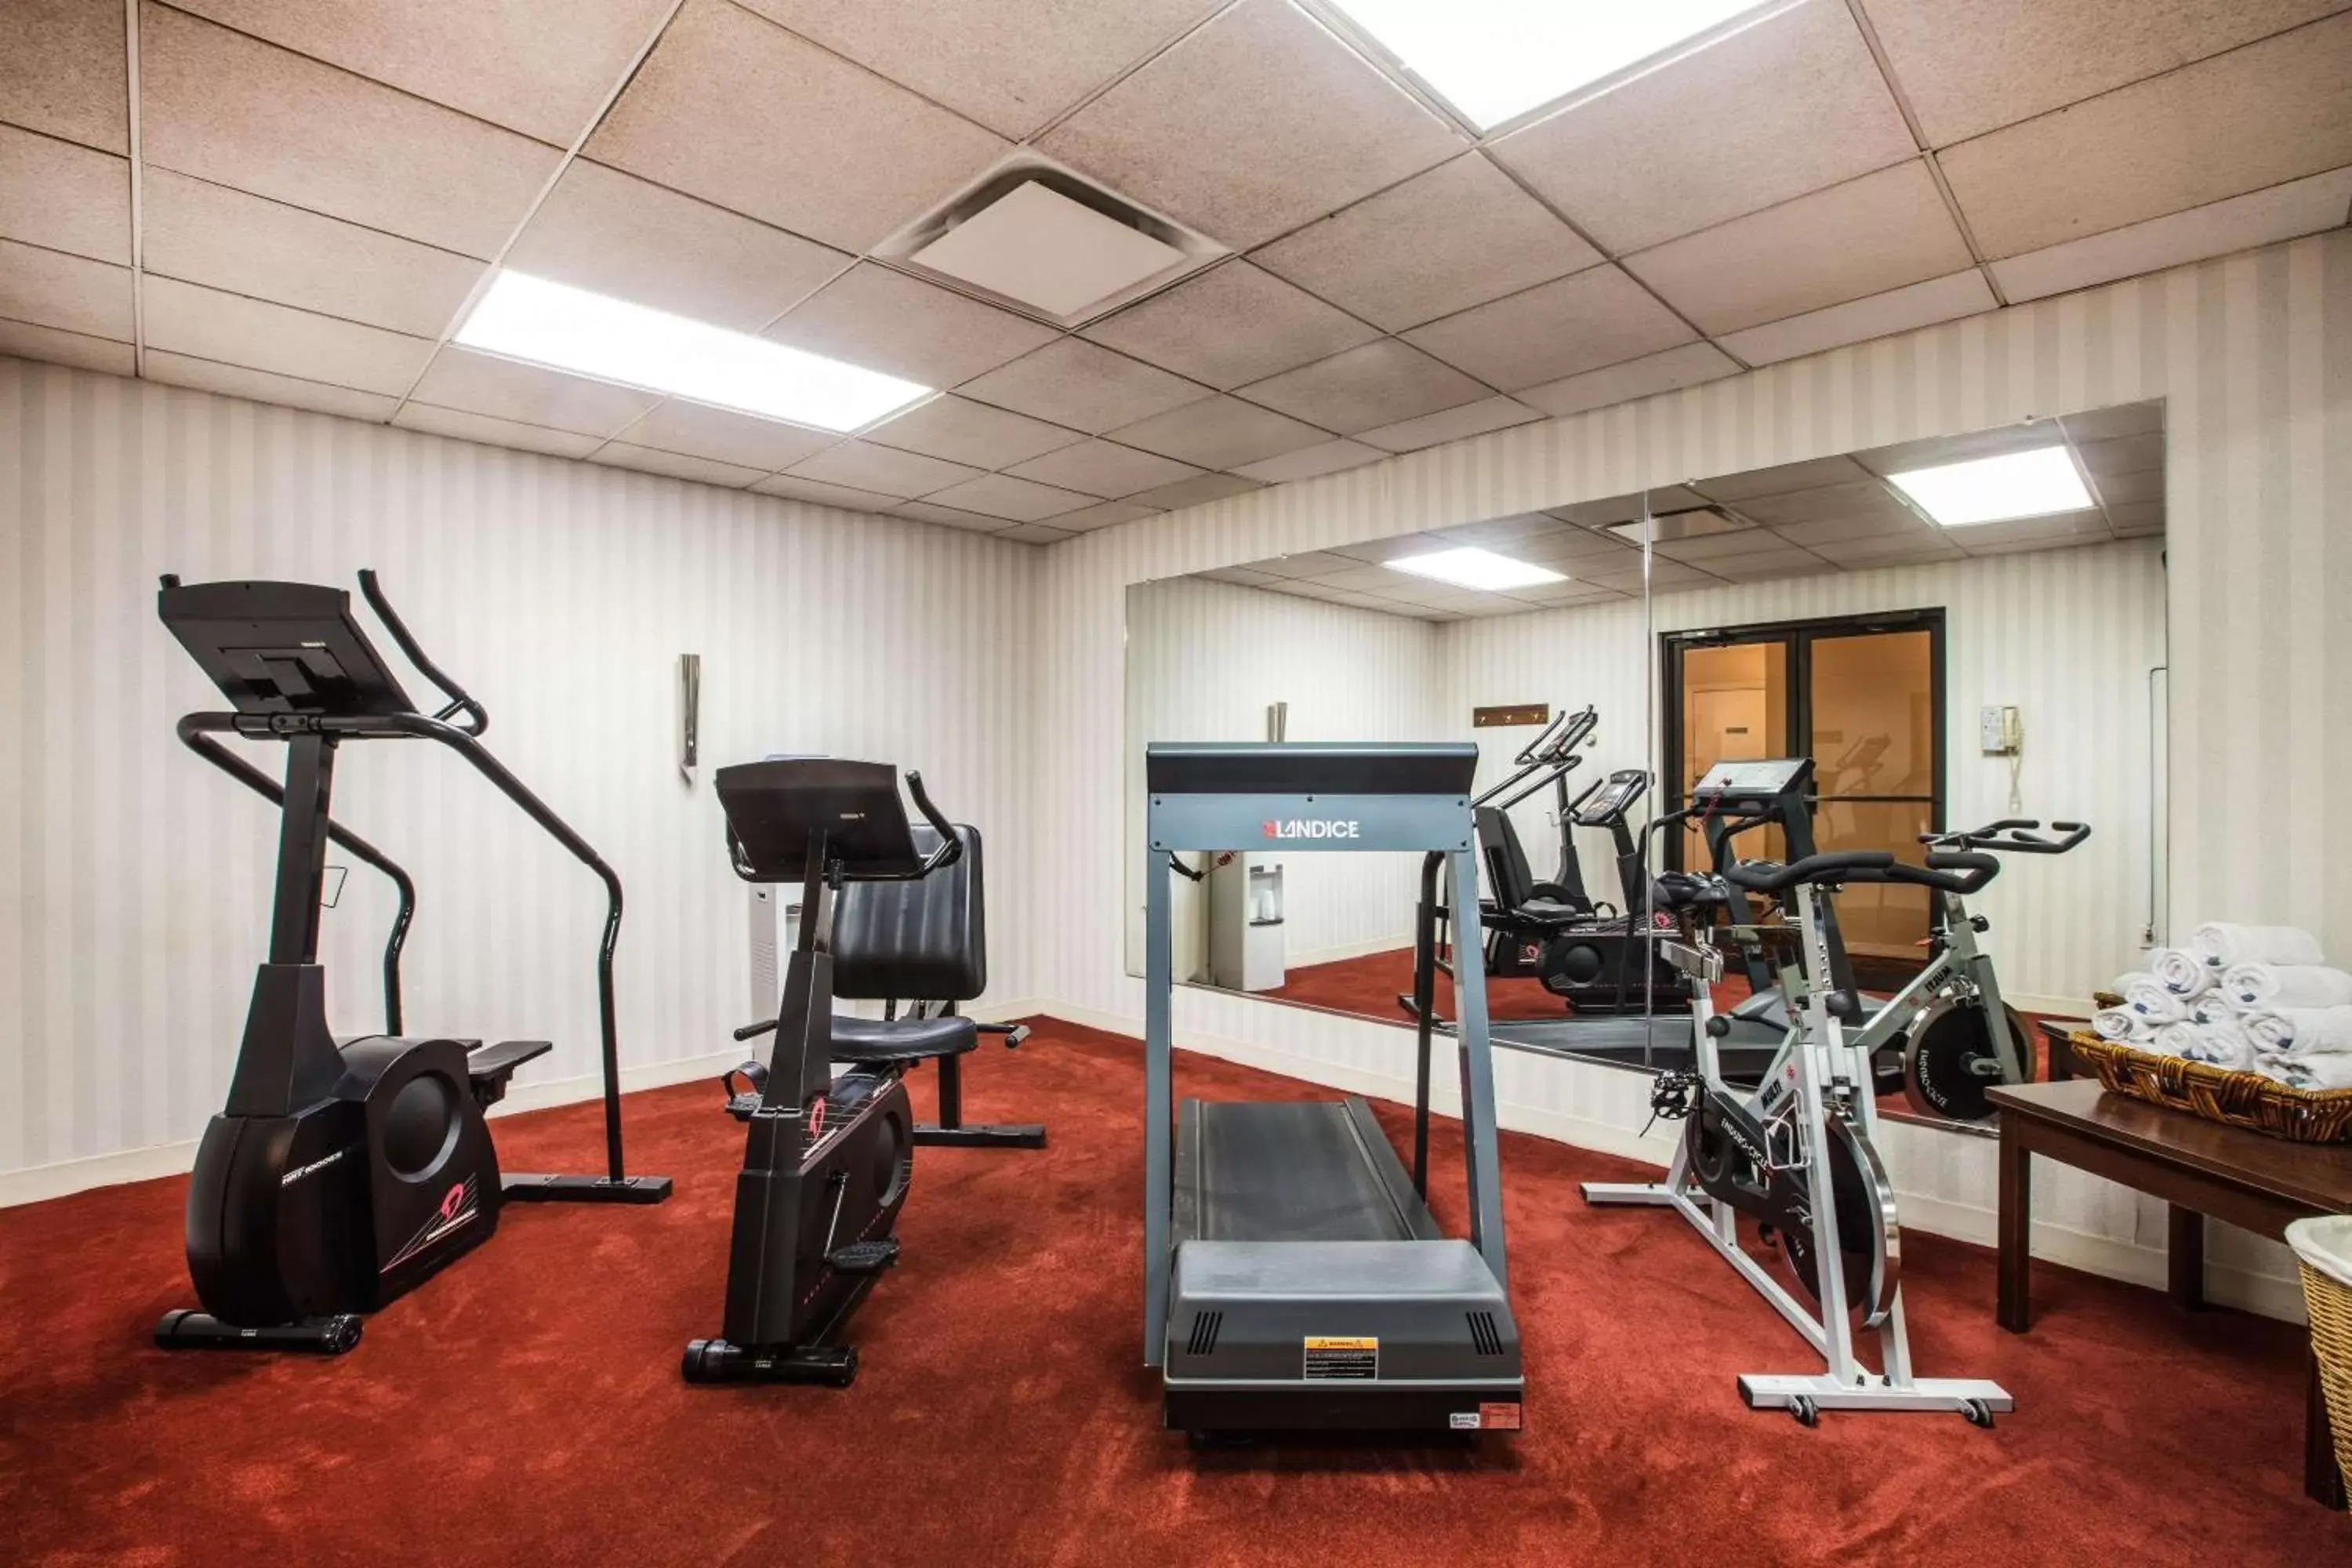 Fitness centre/facilities, Fitness Center/Facilities in Ramada by Wyndham Ligonier